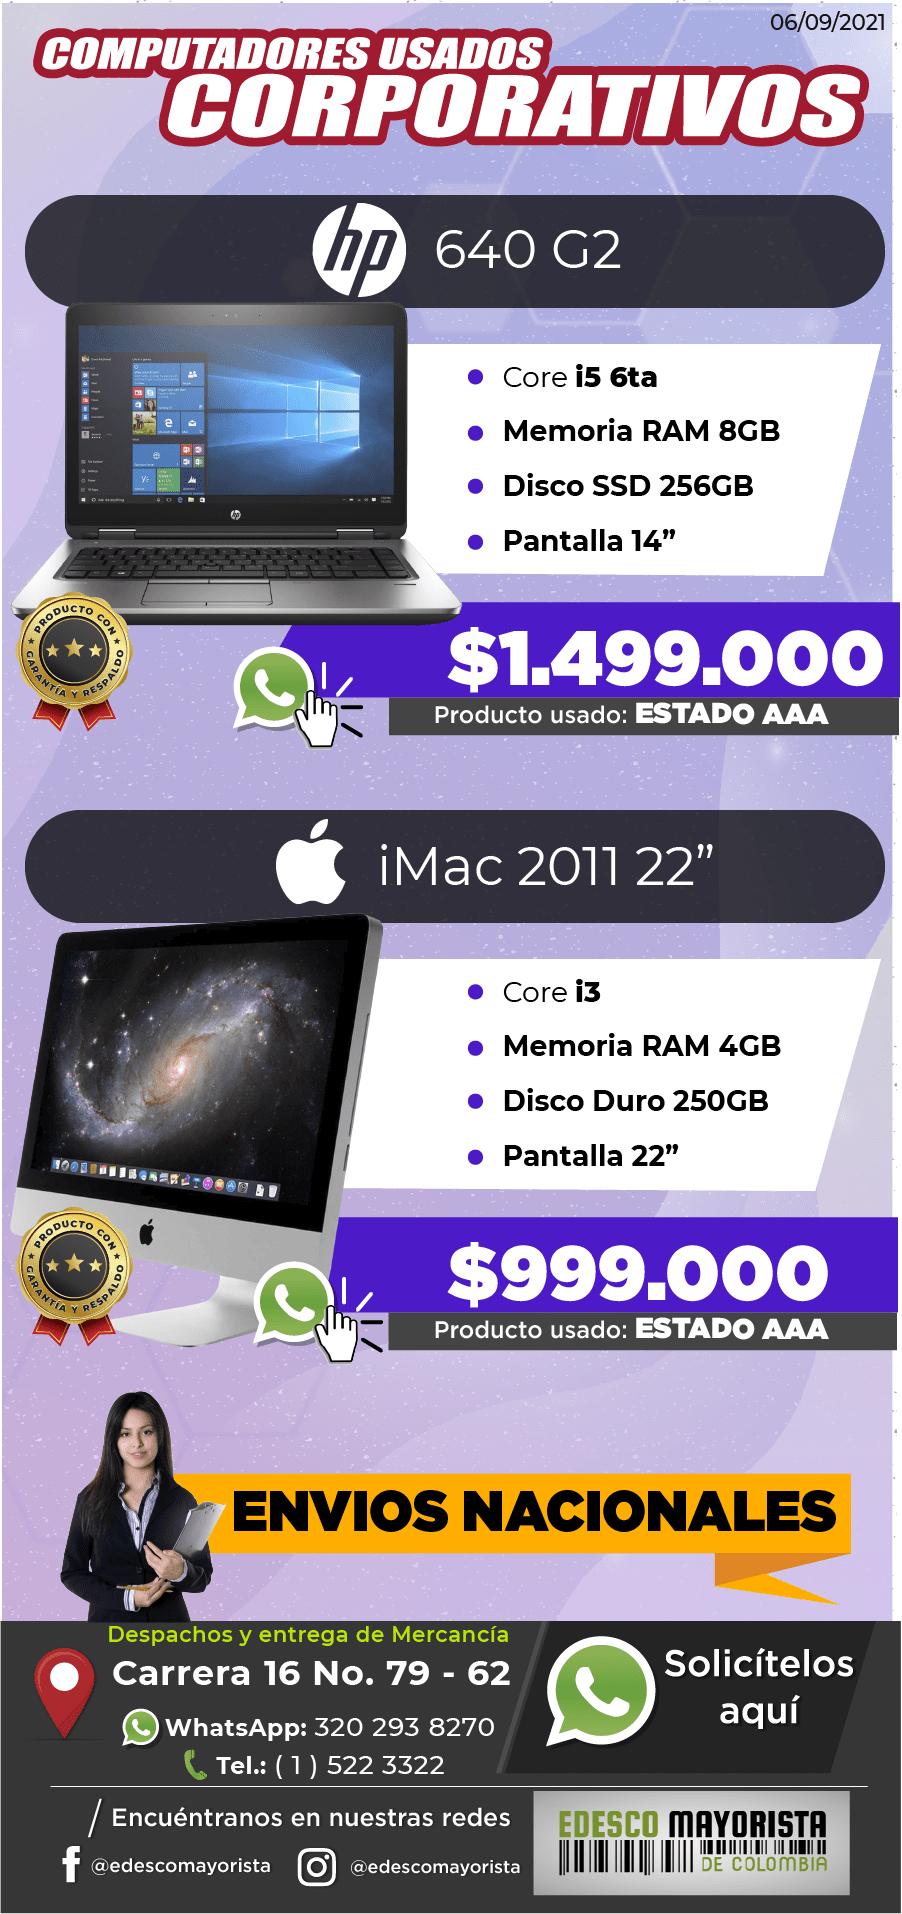 Portátil HP 640 G2 - Apple iMac 2011 22